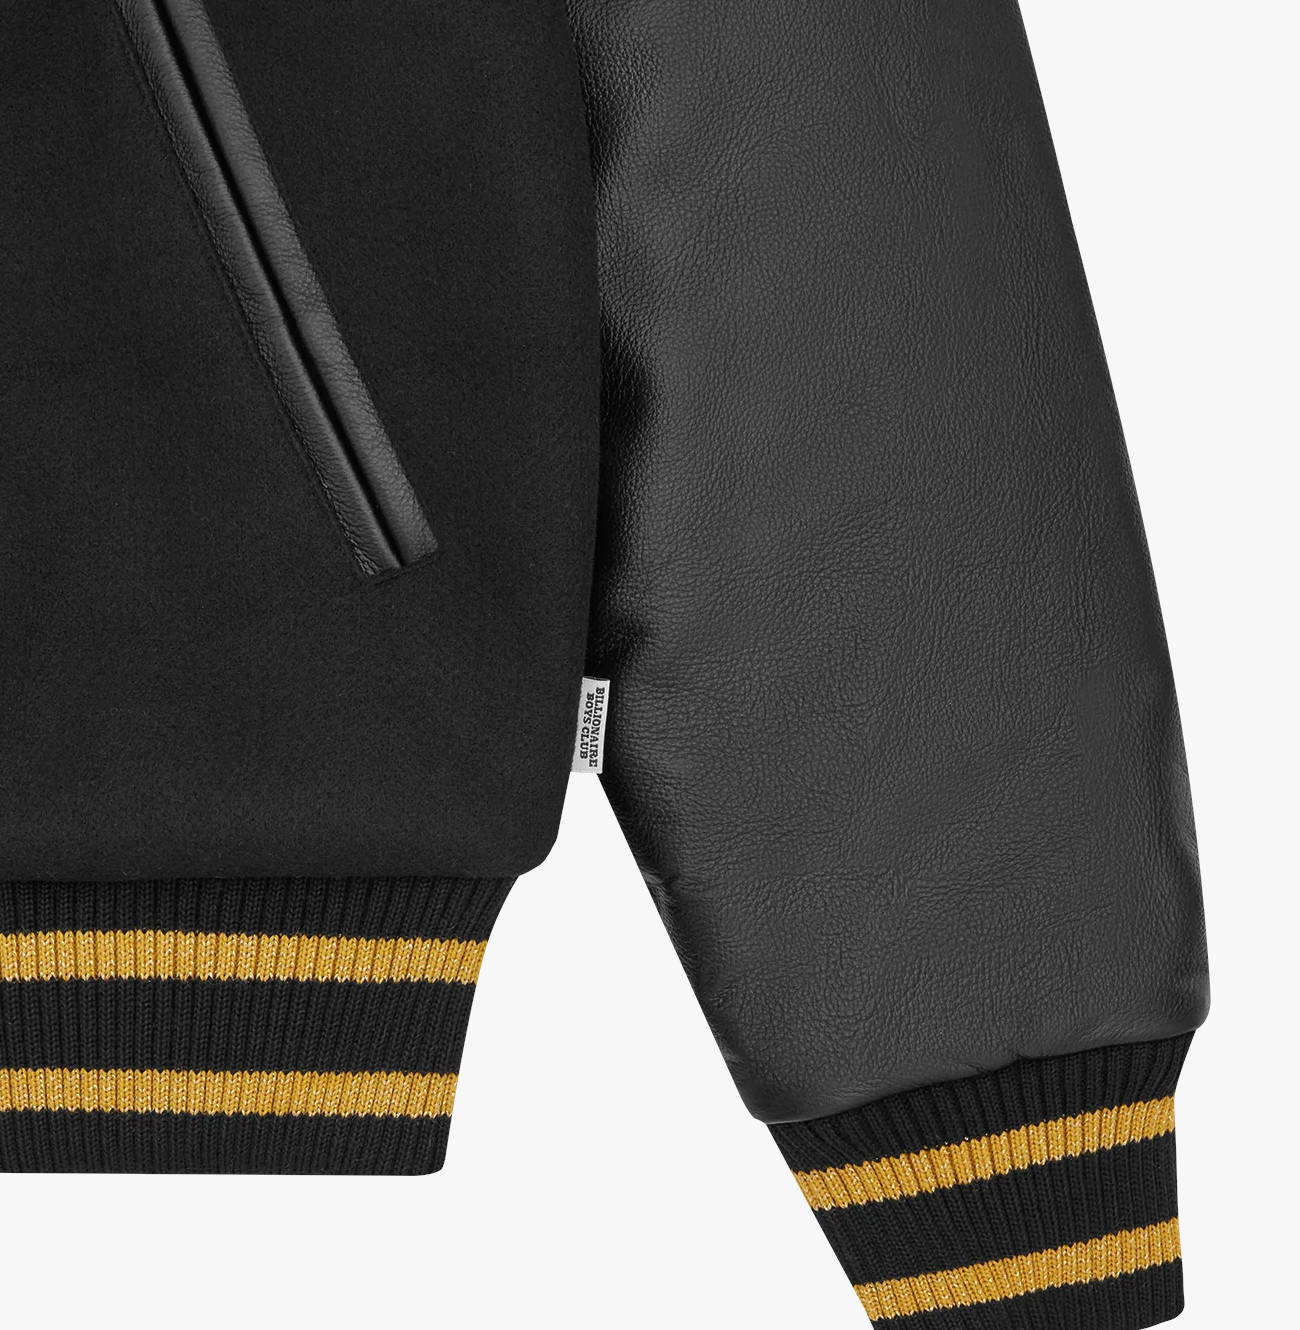 Billionaire Boys Club Leather Sleeve Varsity Jacket Black/Gold